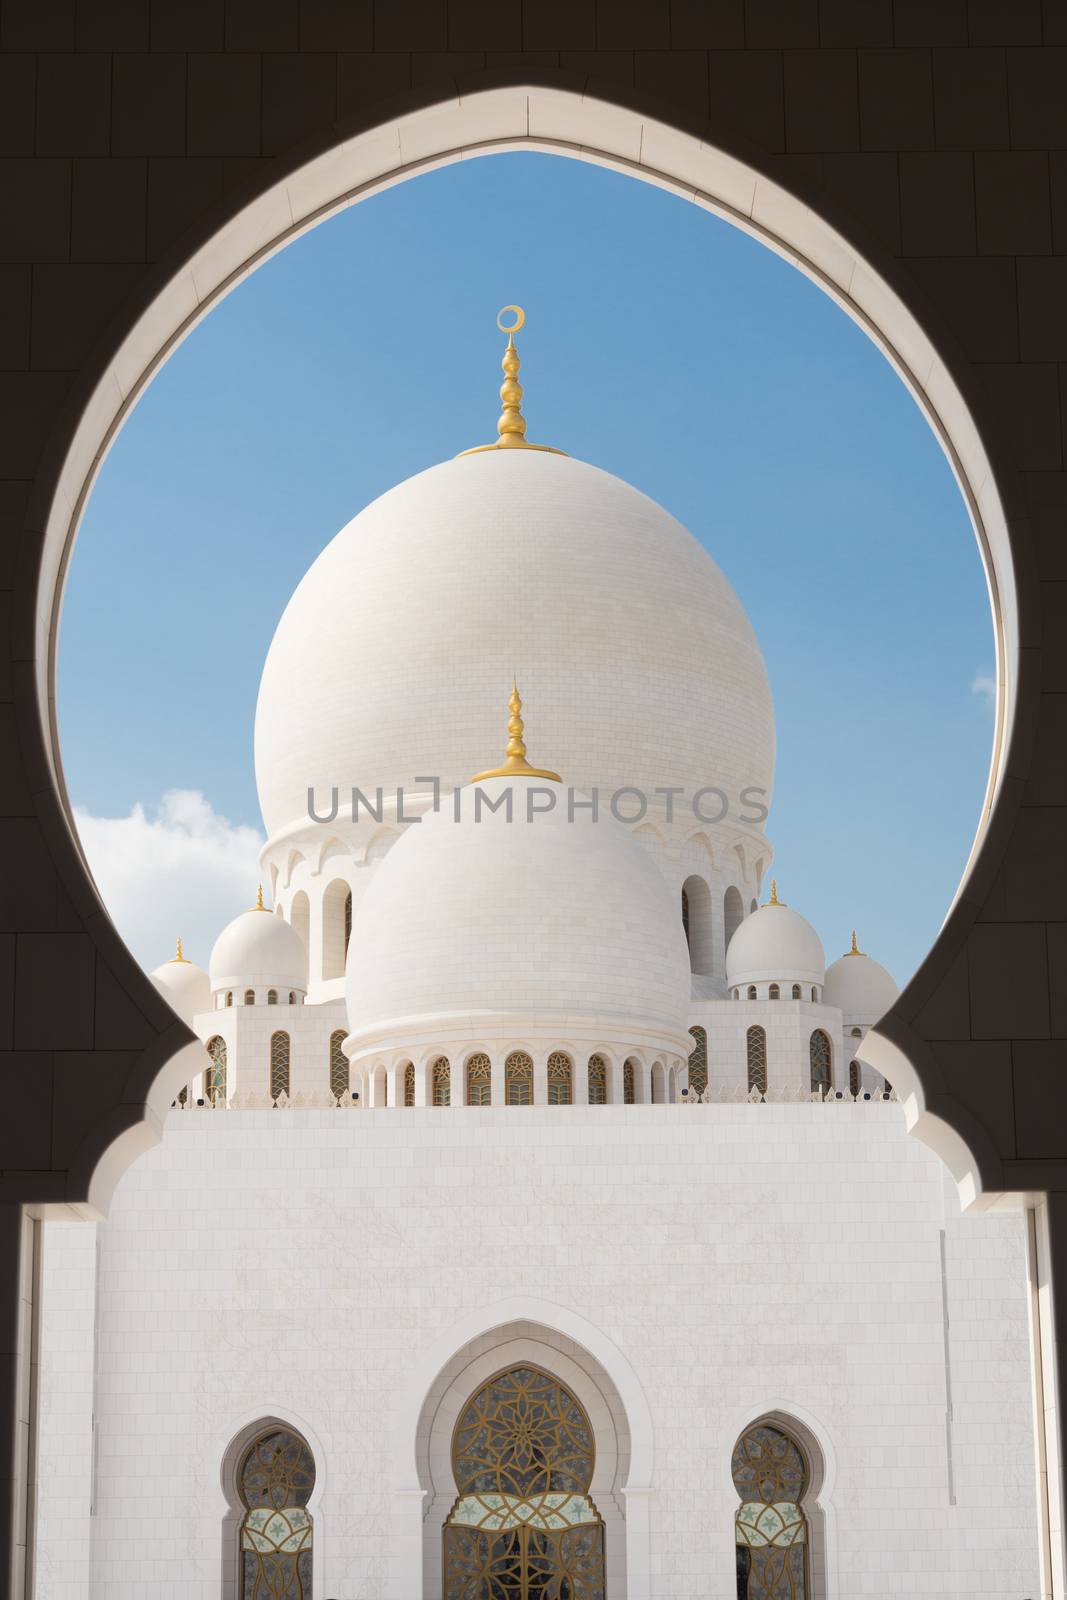 Sheikh Zayed Grand Mosque in Abu Dhabi, United Arab Emirates.